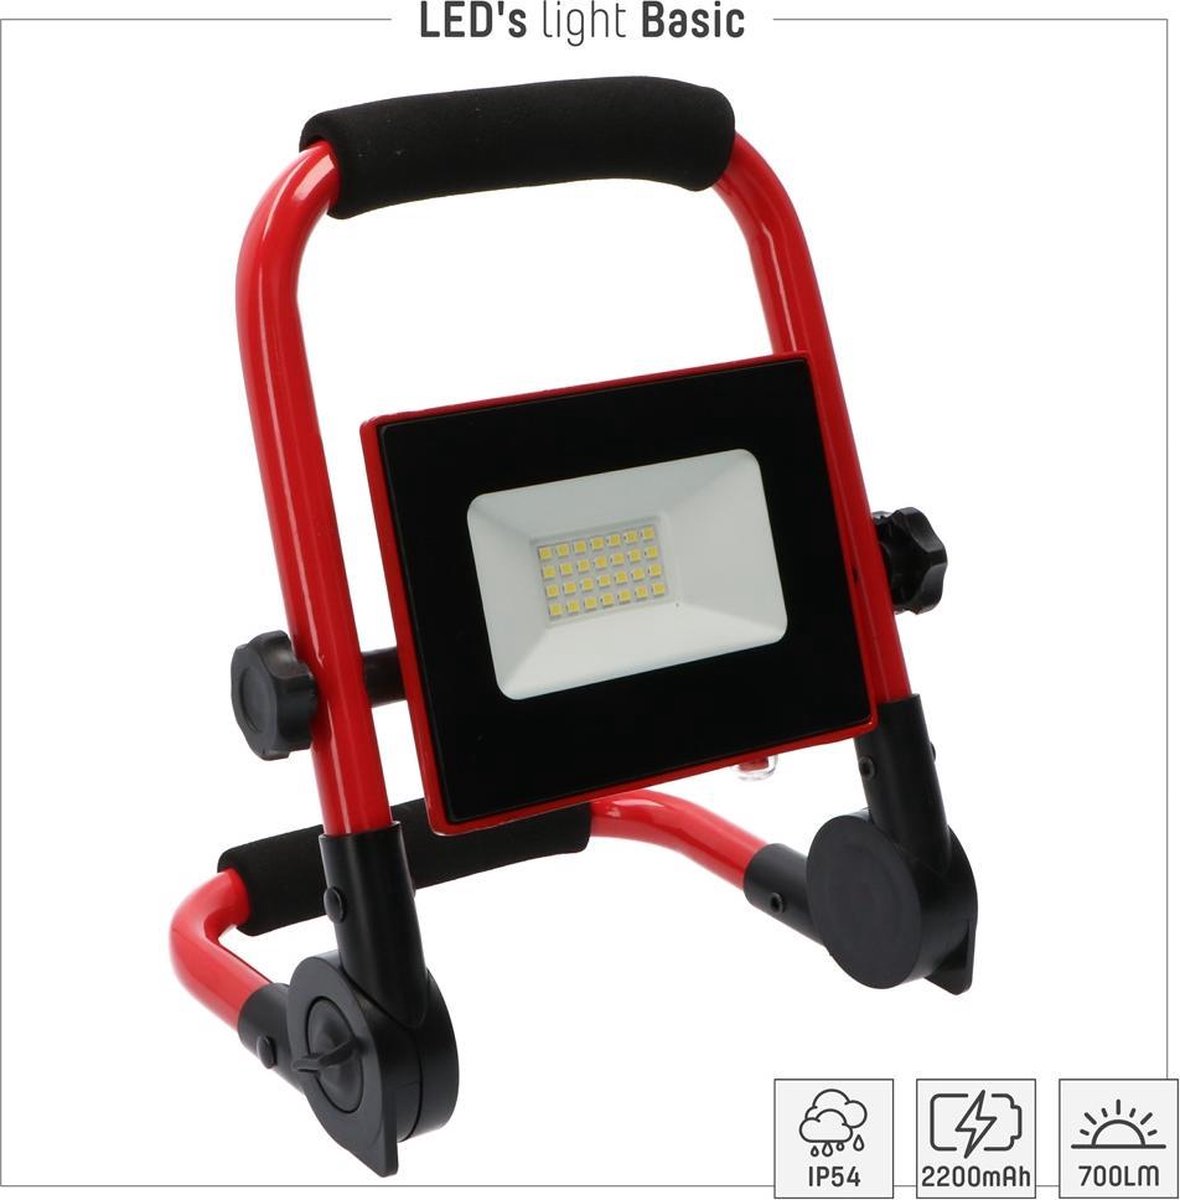 LED Werklamp met oplaadbare accu - 10W breedstraler - Oplaadbaar & Inklapbaar - Roodkleurige bouwlamp